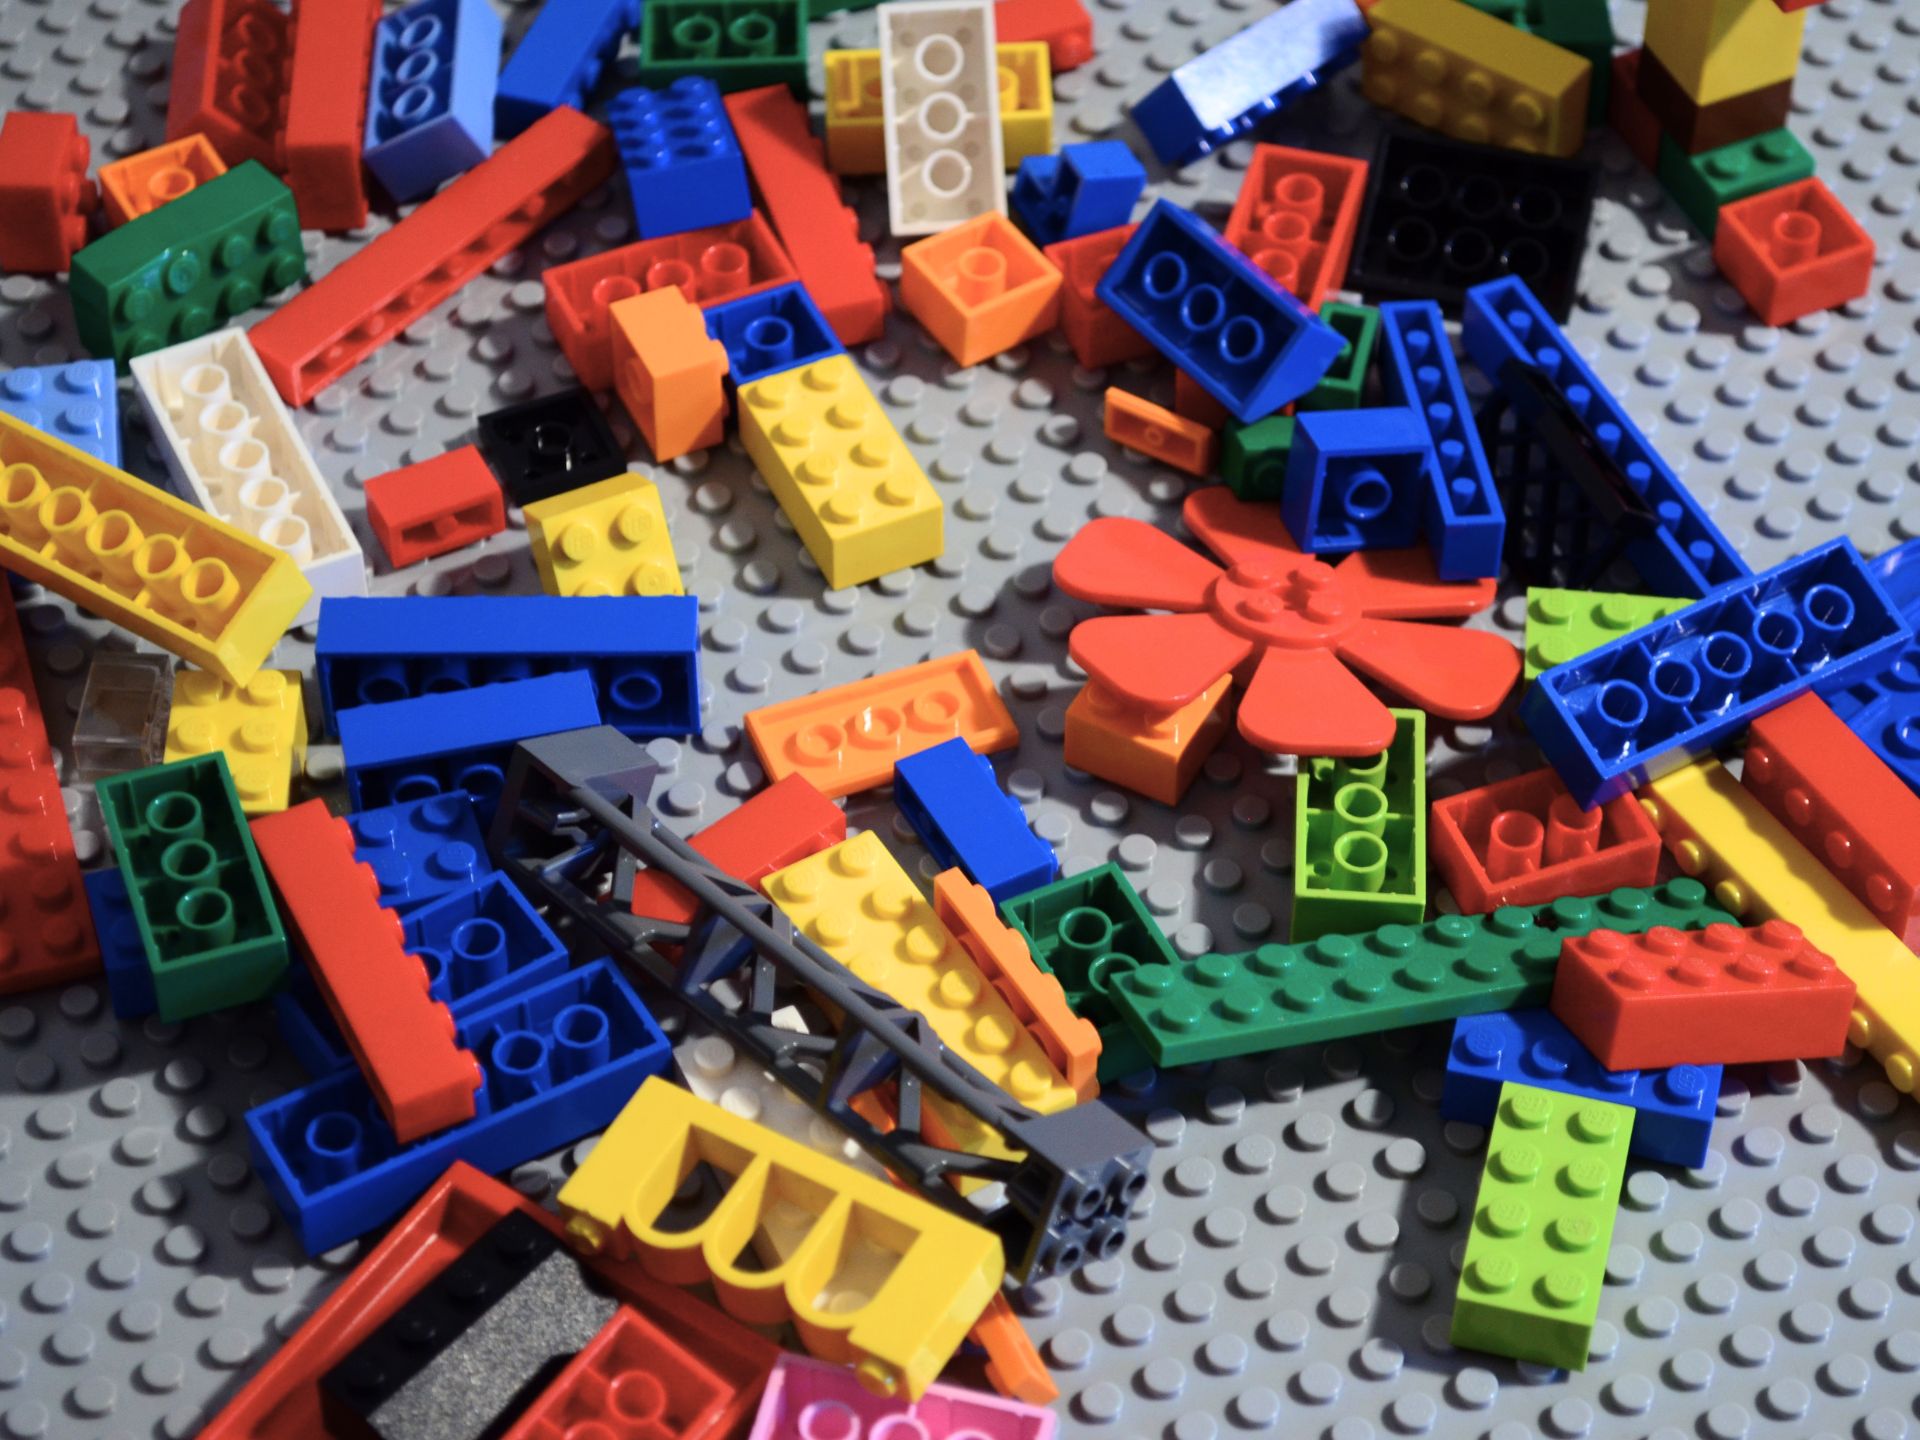 A collection of LEGOs